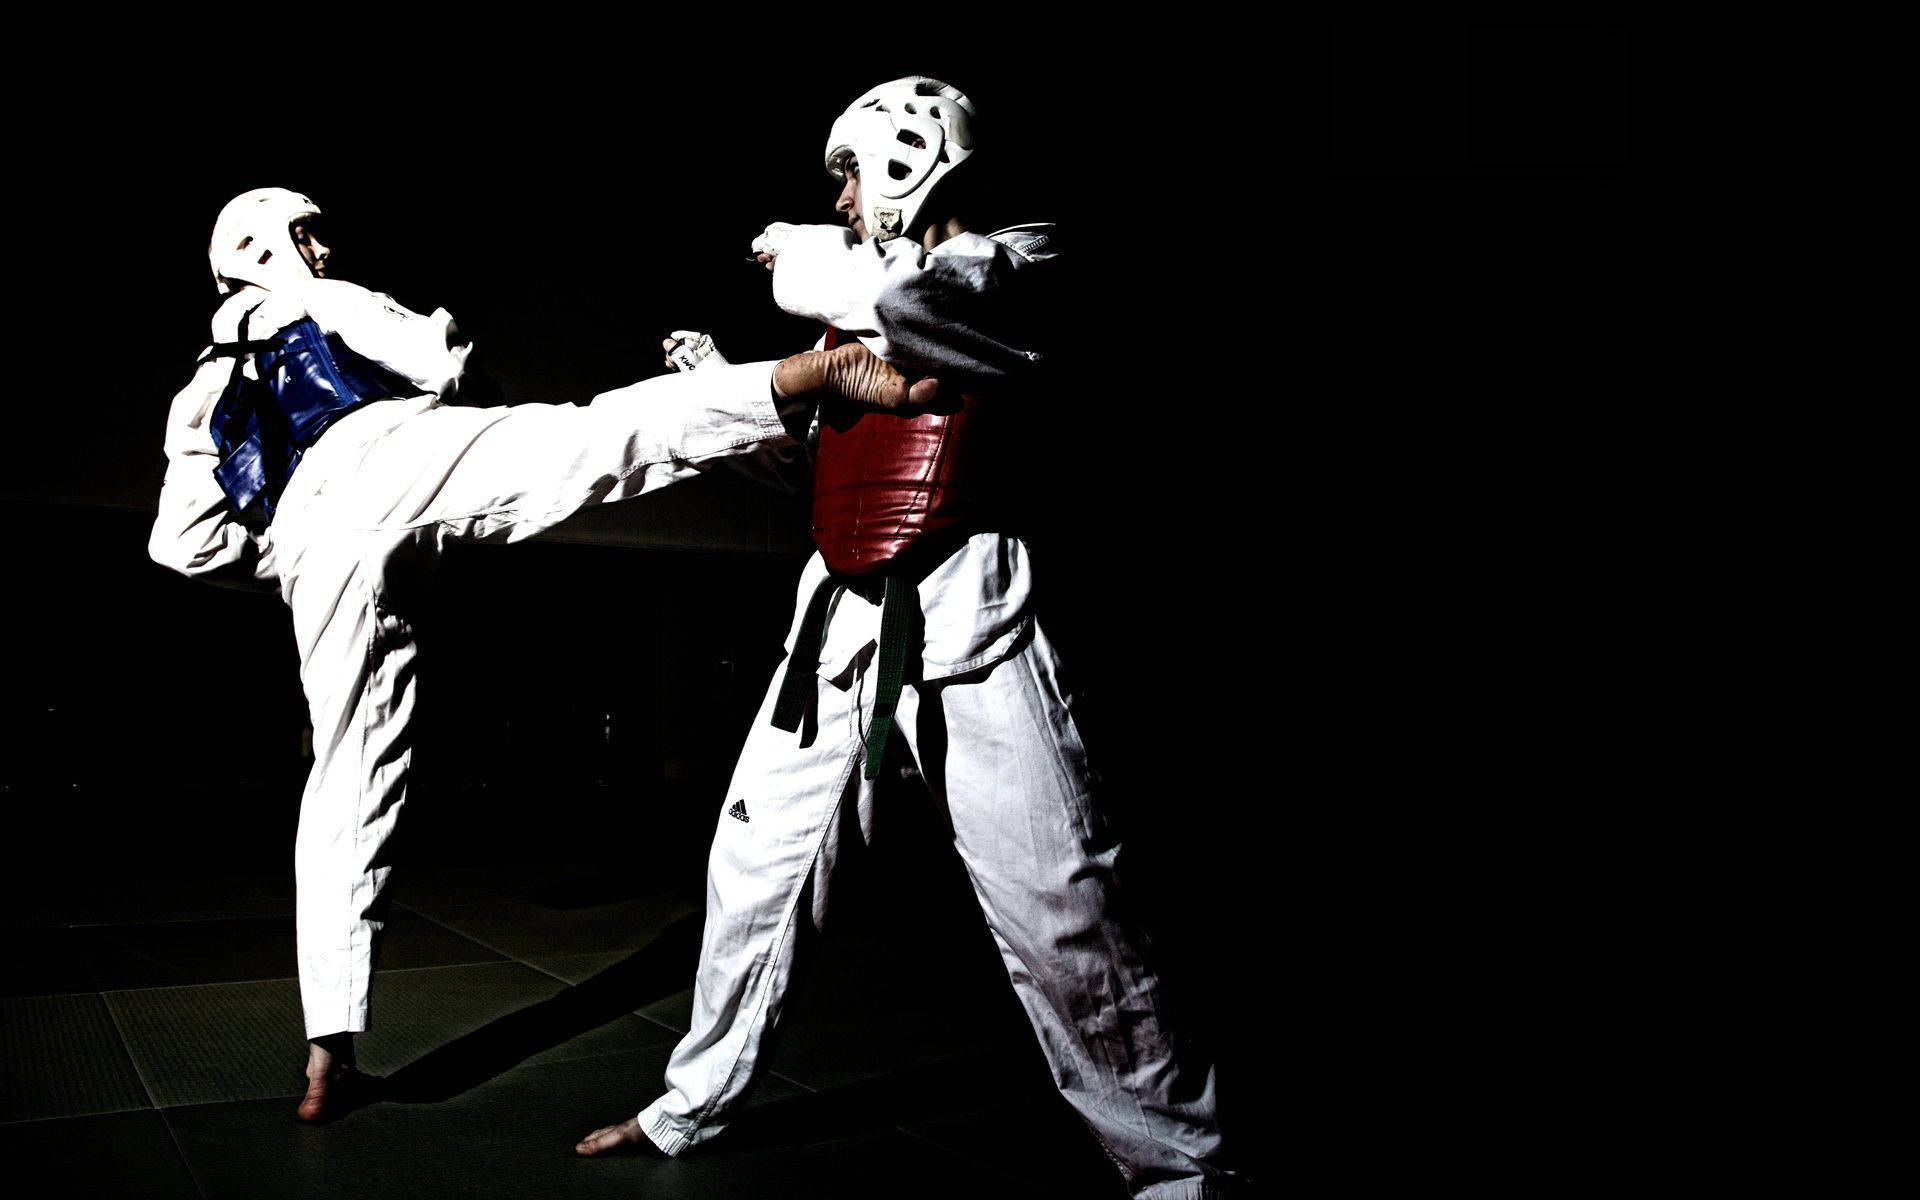 Dark Aesthetic Taekwondo Sport Taekwondoin Fight Wallpaper